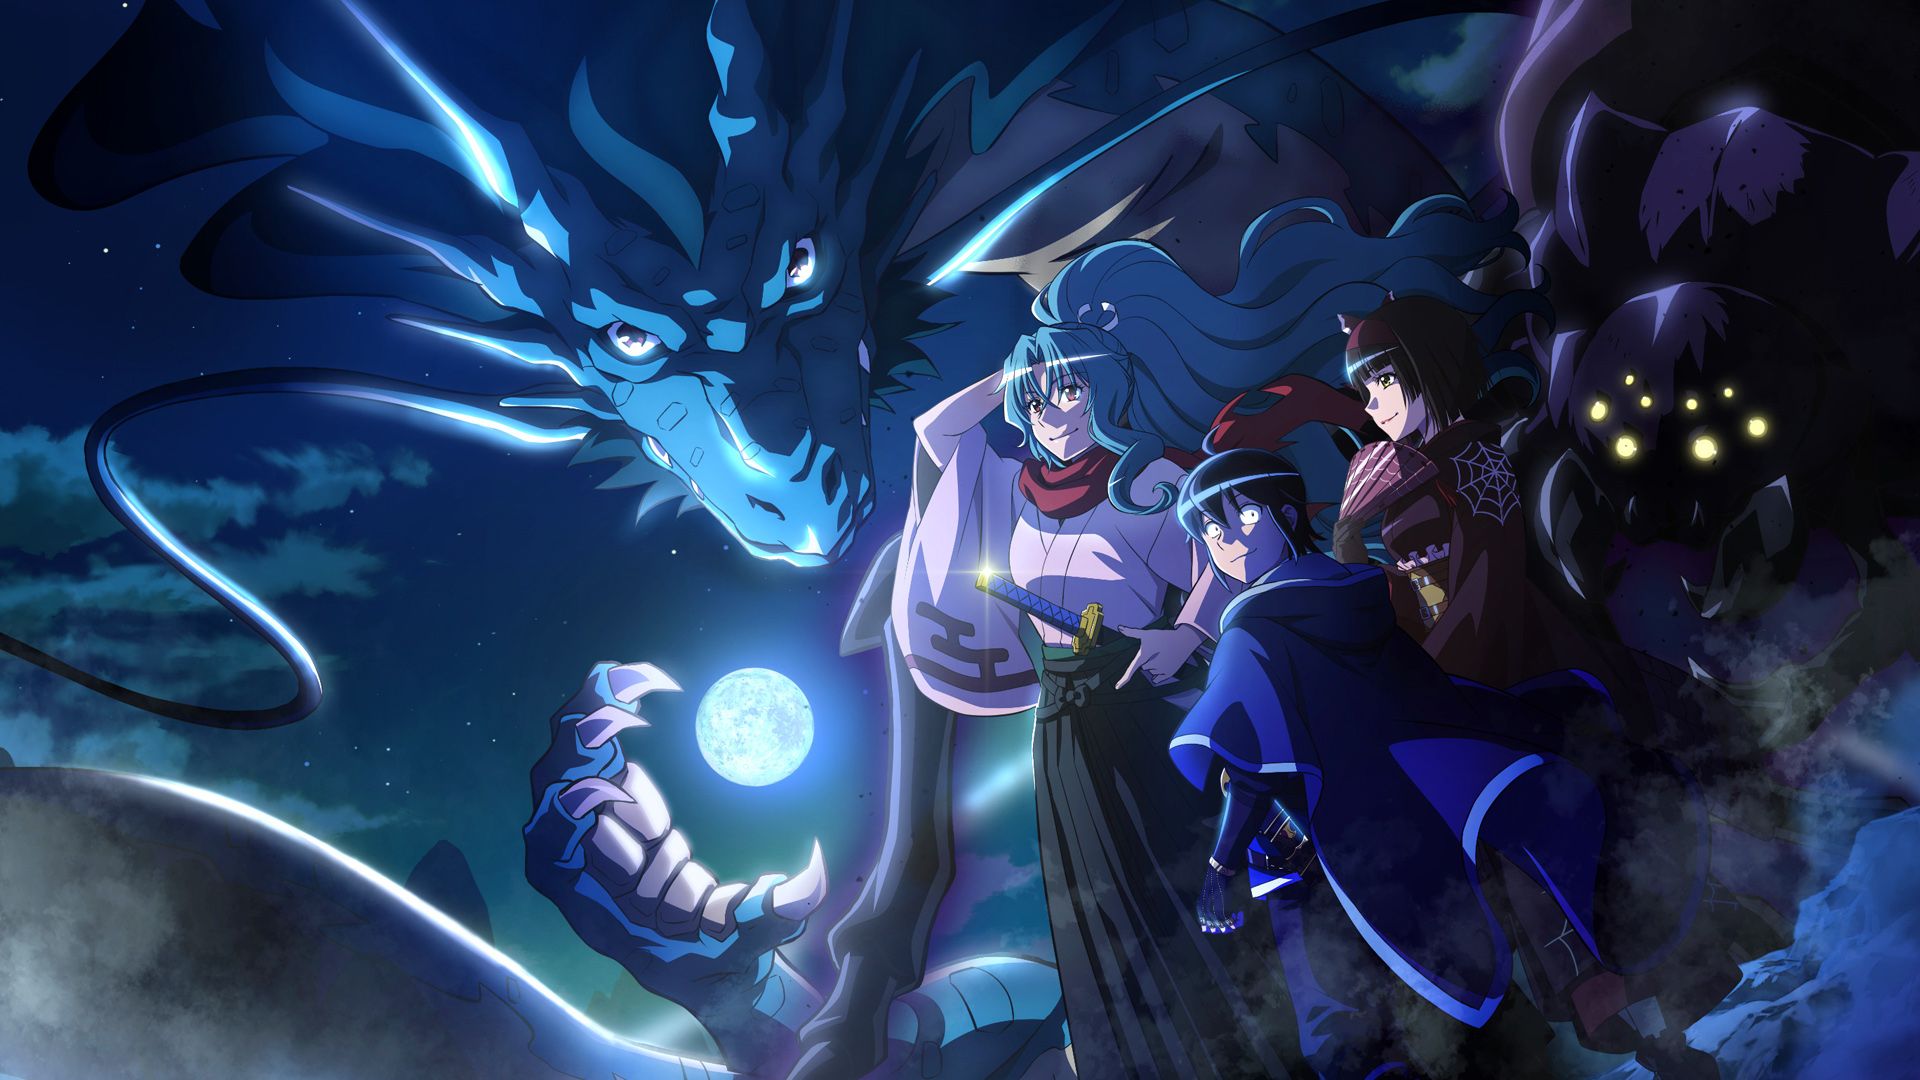 Tsukimichi: Moonlit Fantasy background